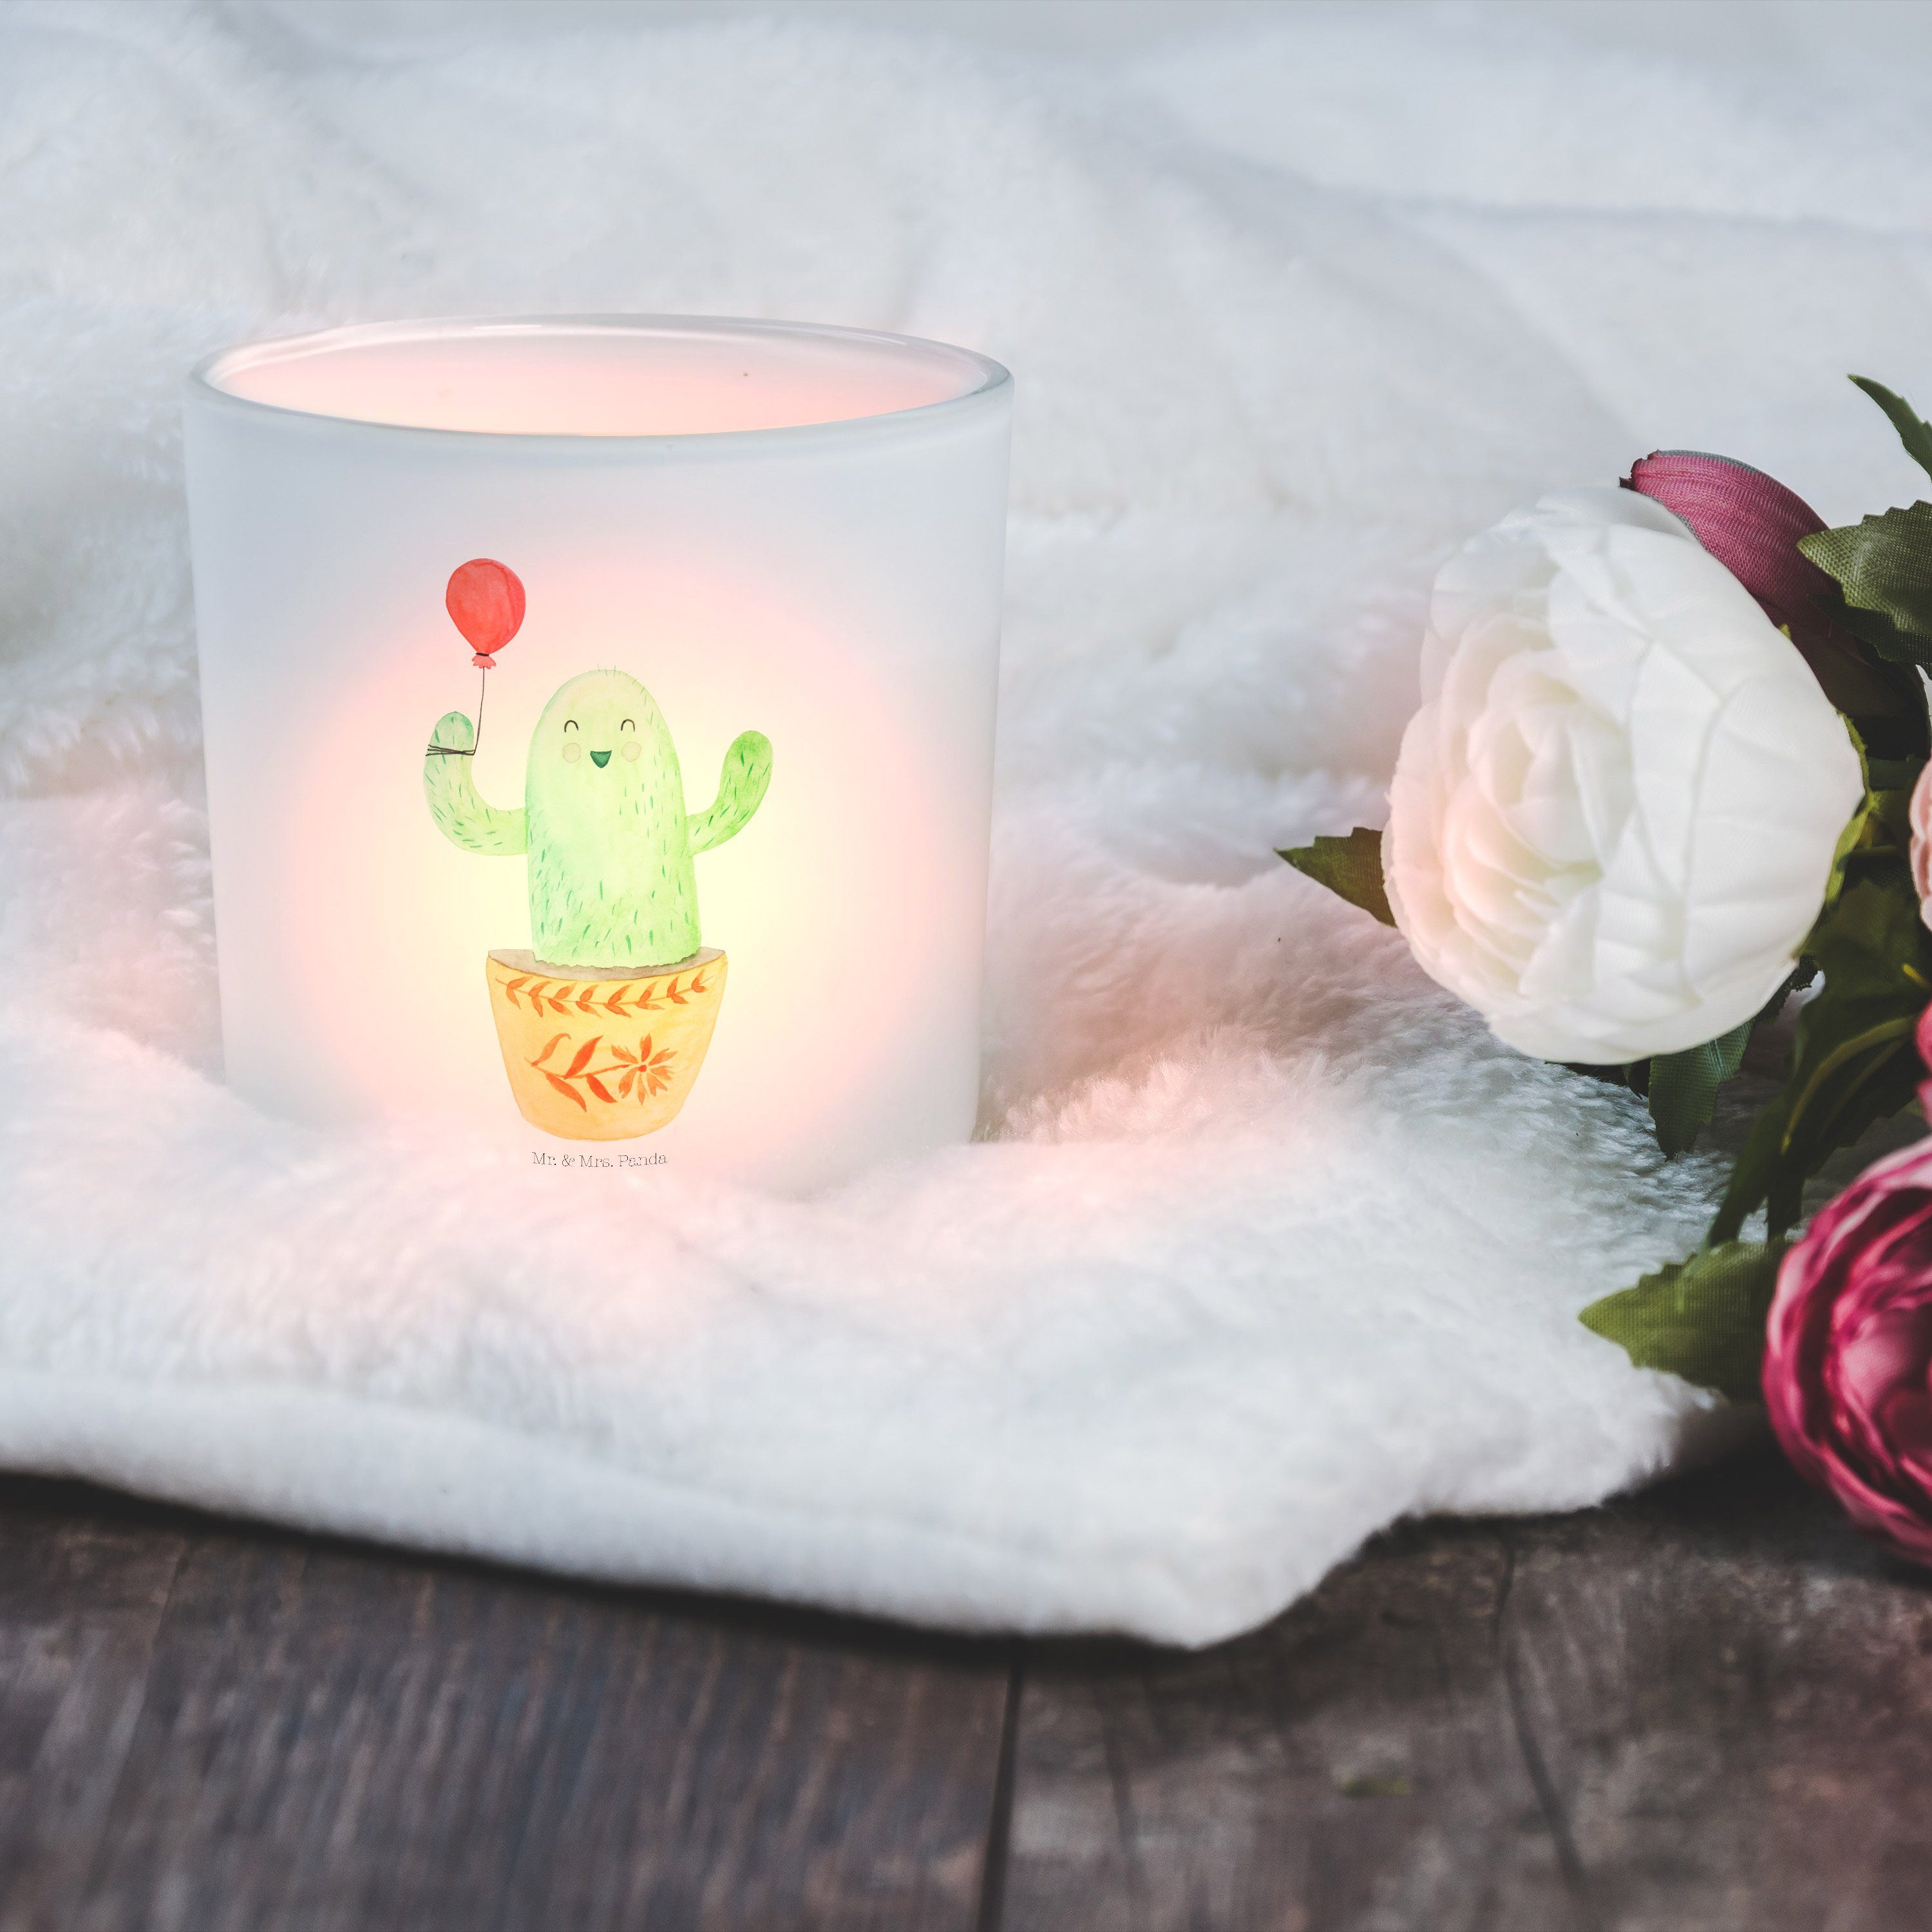 Mr. & Mrs. Panda Teelic St) - Kerzenlicht, - Transparent Geschenk, Luftballon Büro, Kaktus Windlicht (1